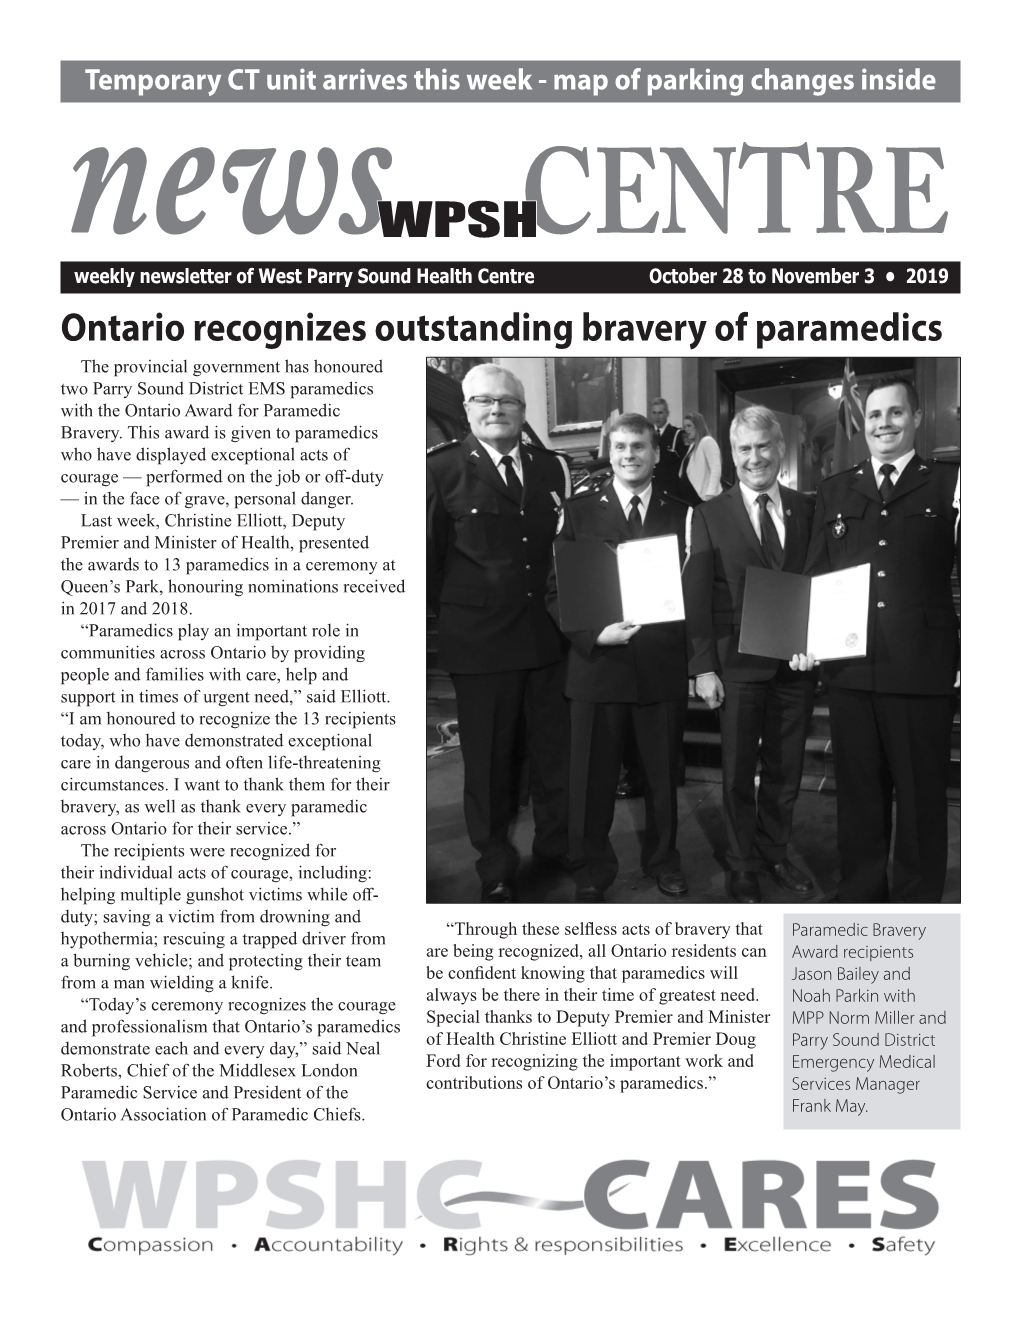 Ontario Recognizes Outstanding Bravery of Paramedics